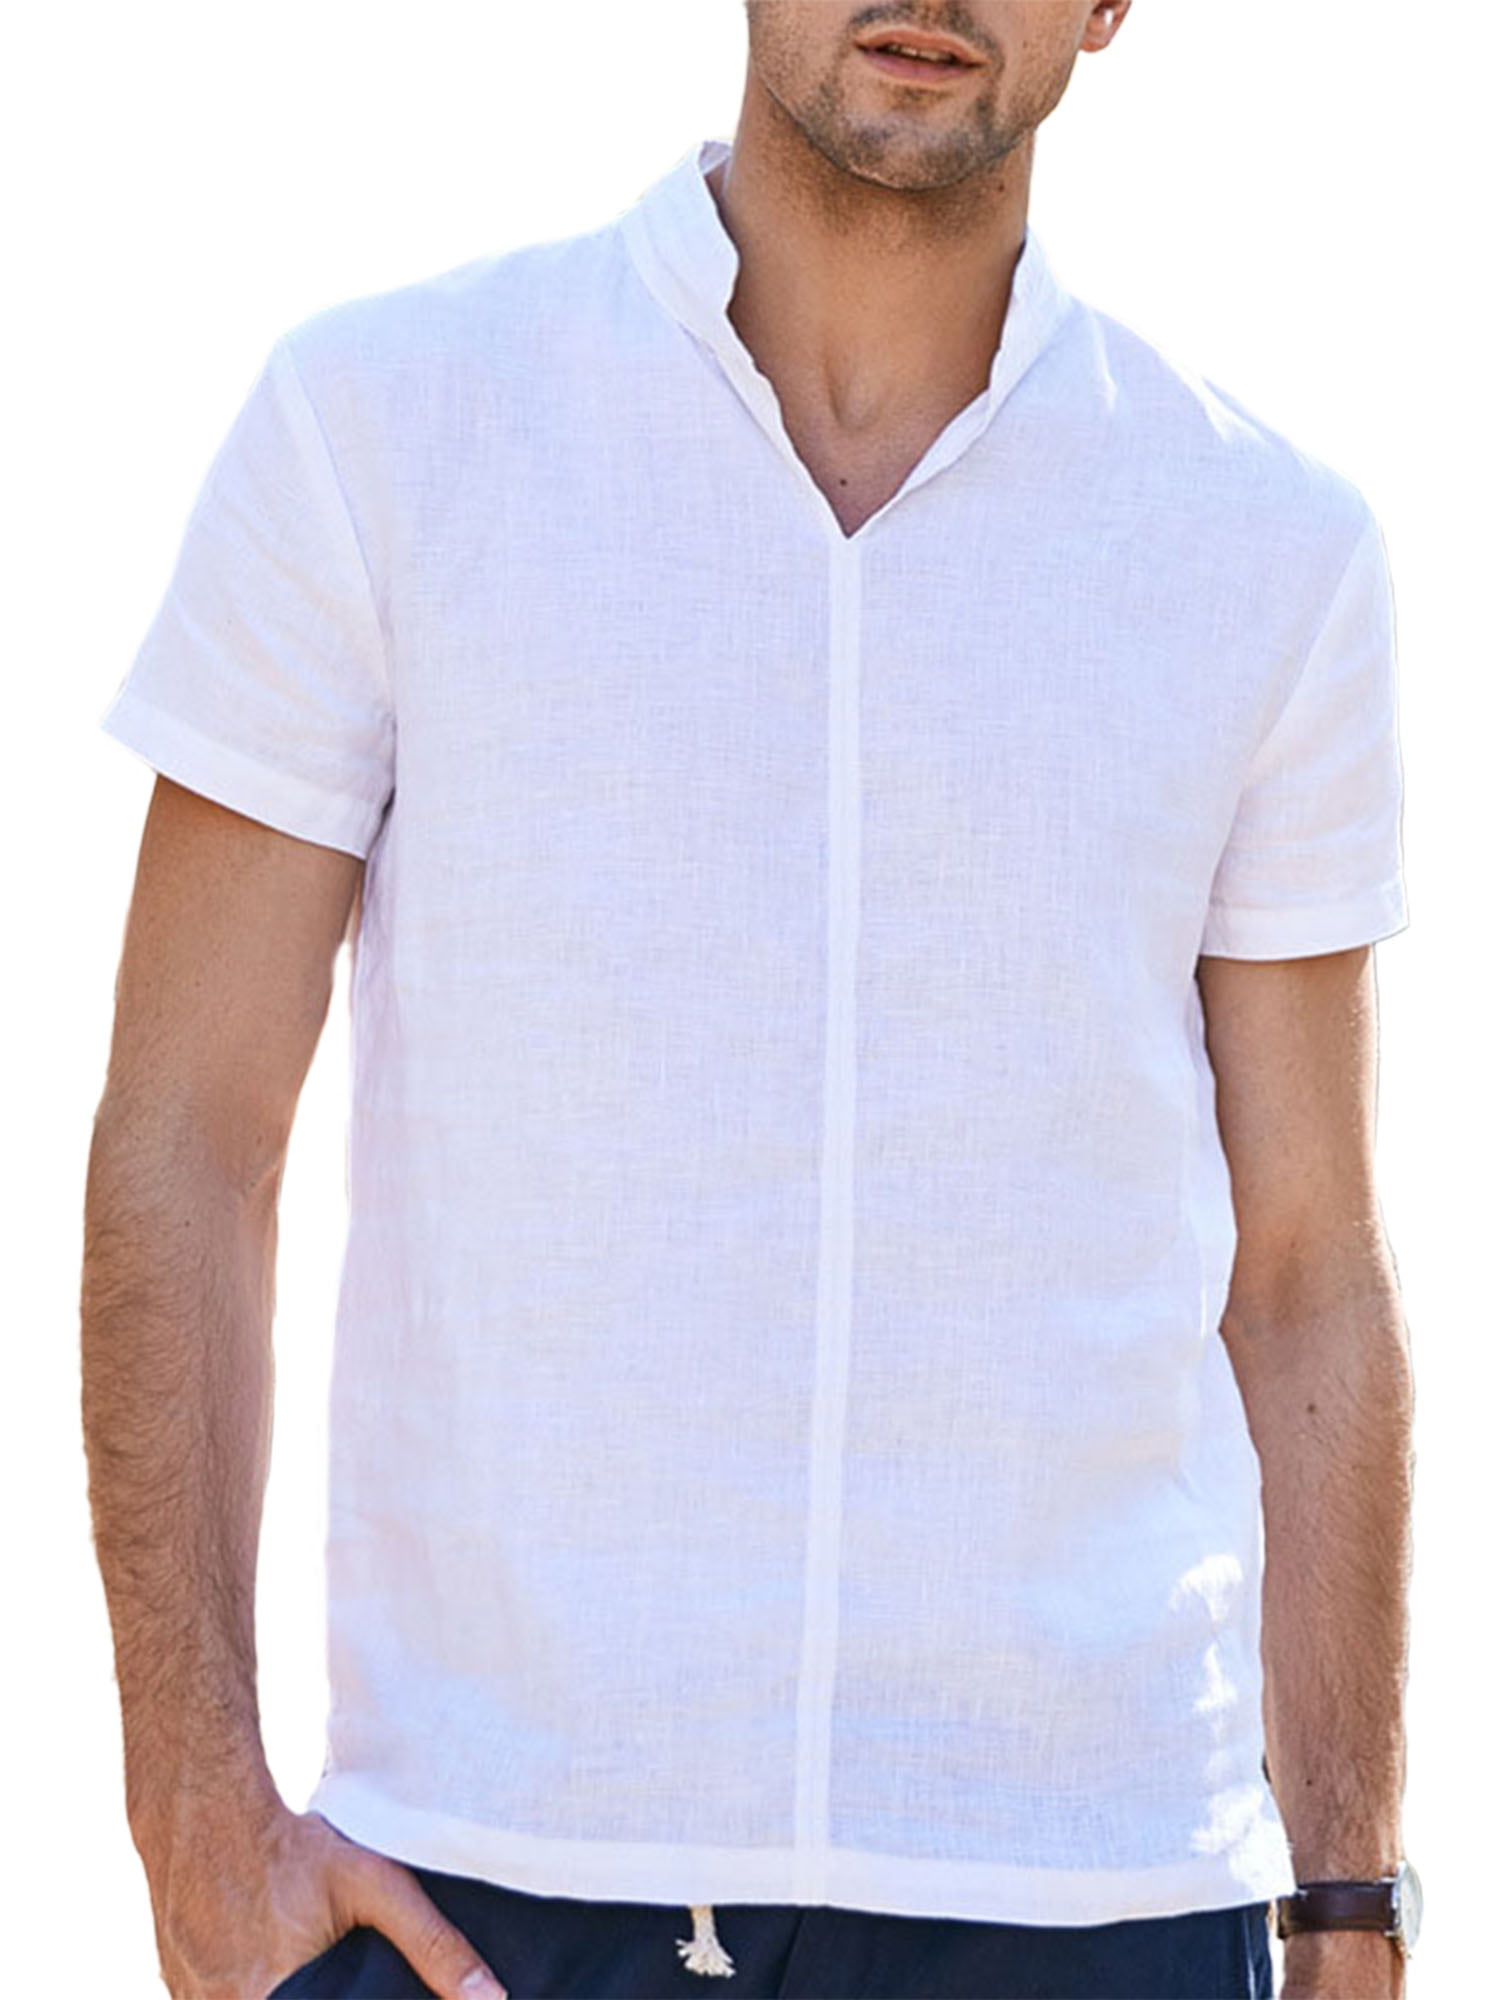 Domple Mens Stand Collar Cotton Linen Short Sleeve Summer Solid T-Shirt Tee 